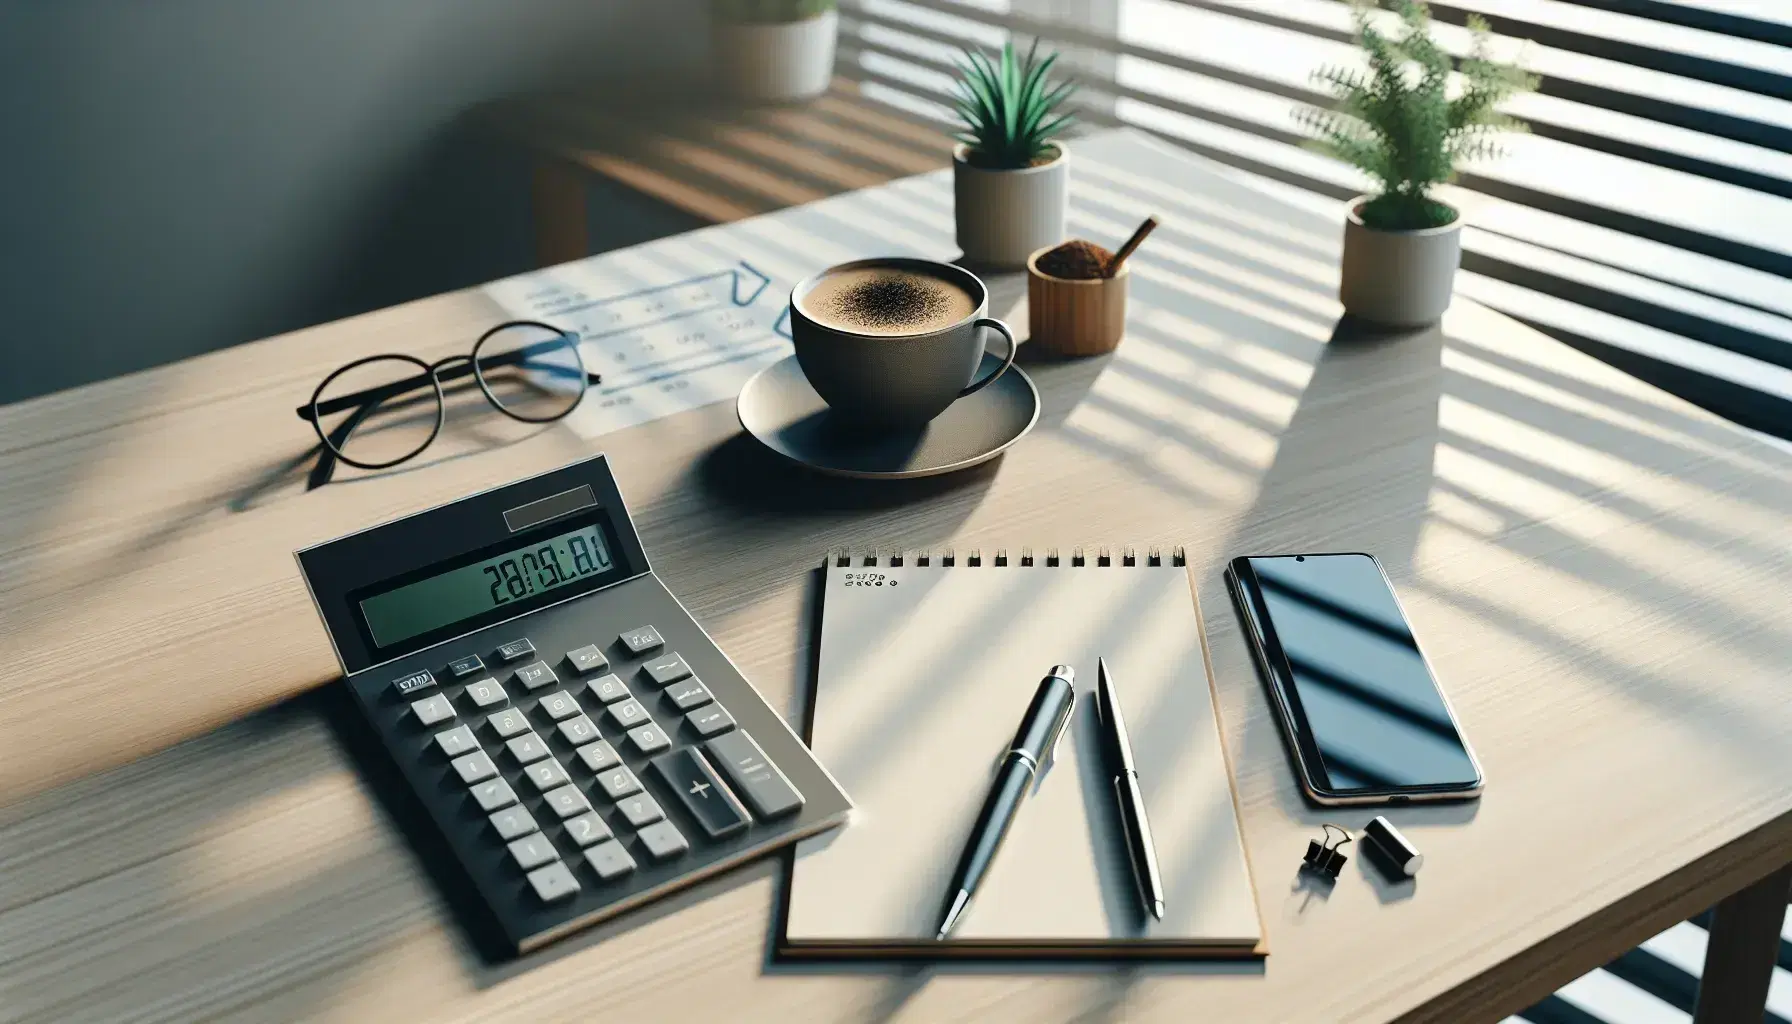 Escritorio de oficina de madera clara con bloc de notas abierto, calculadora moderna, smartphone apagado, taza de café humeante y planta verde.